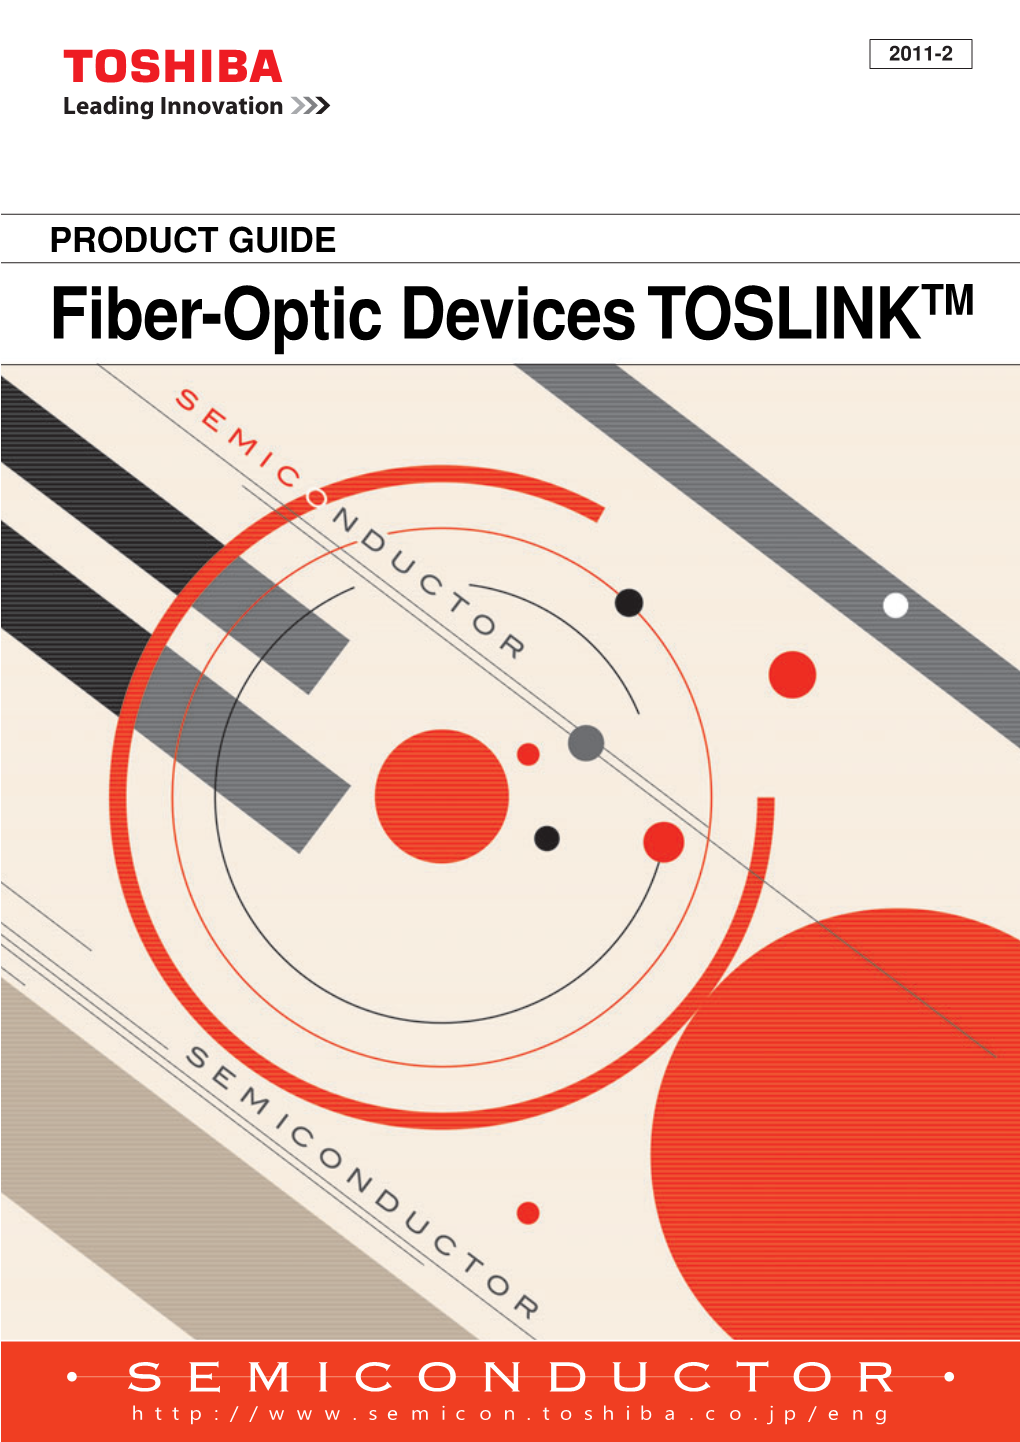 Fiber-Optic Devices TOSLINKTM